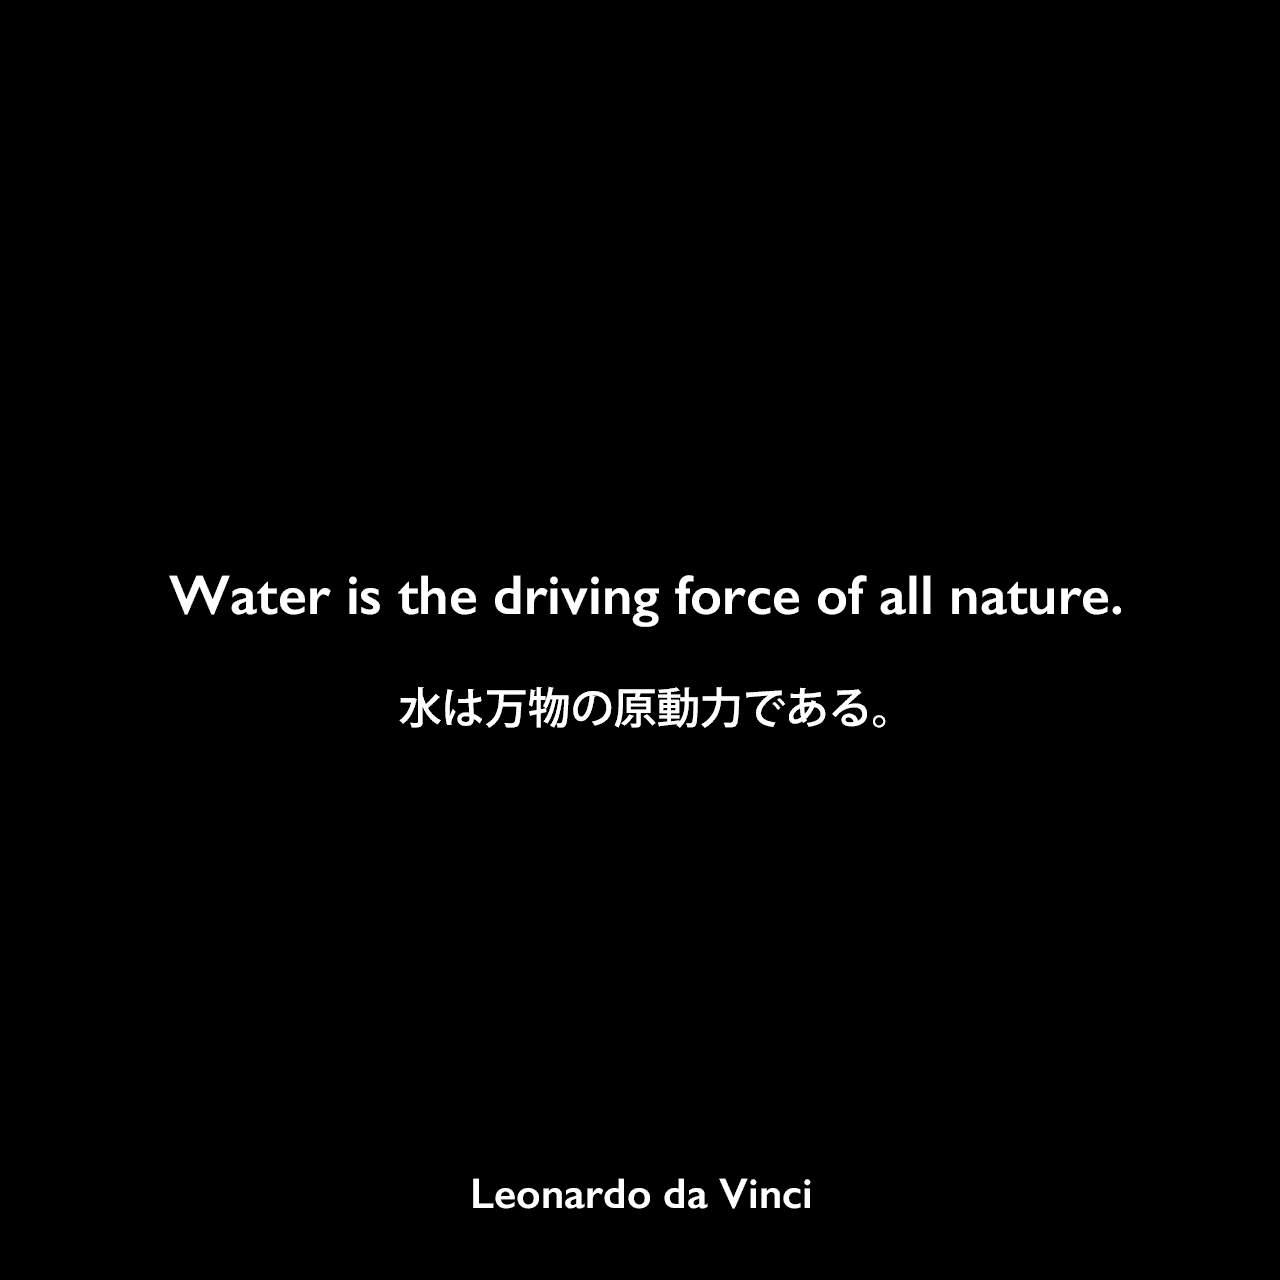 Water is the driving force of all nature.水は万物の原動力である。Leonardo da Vinci